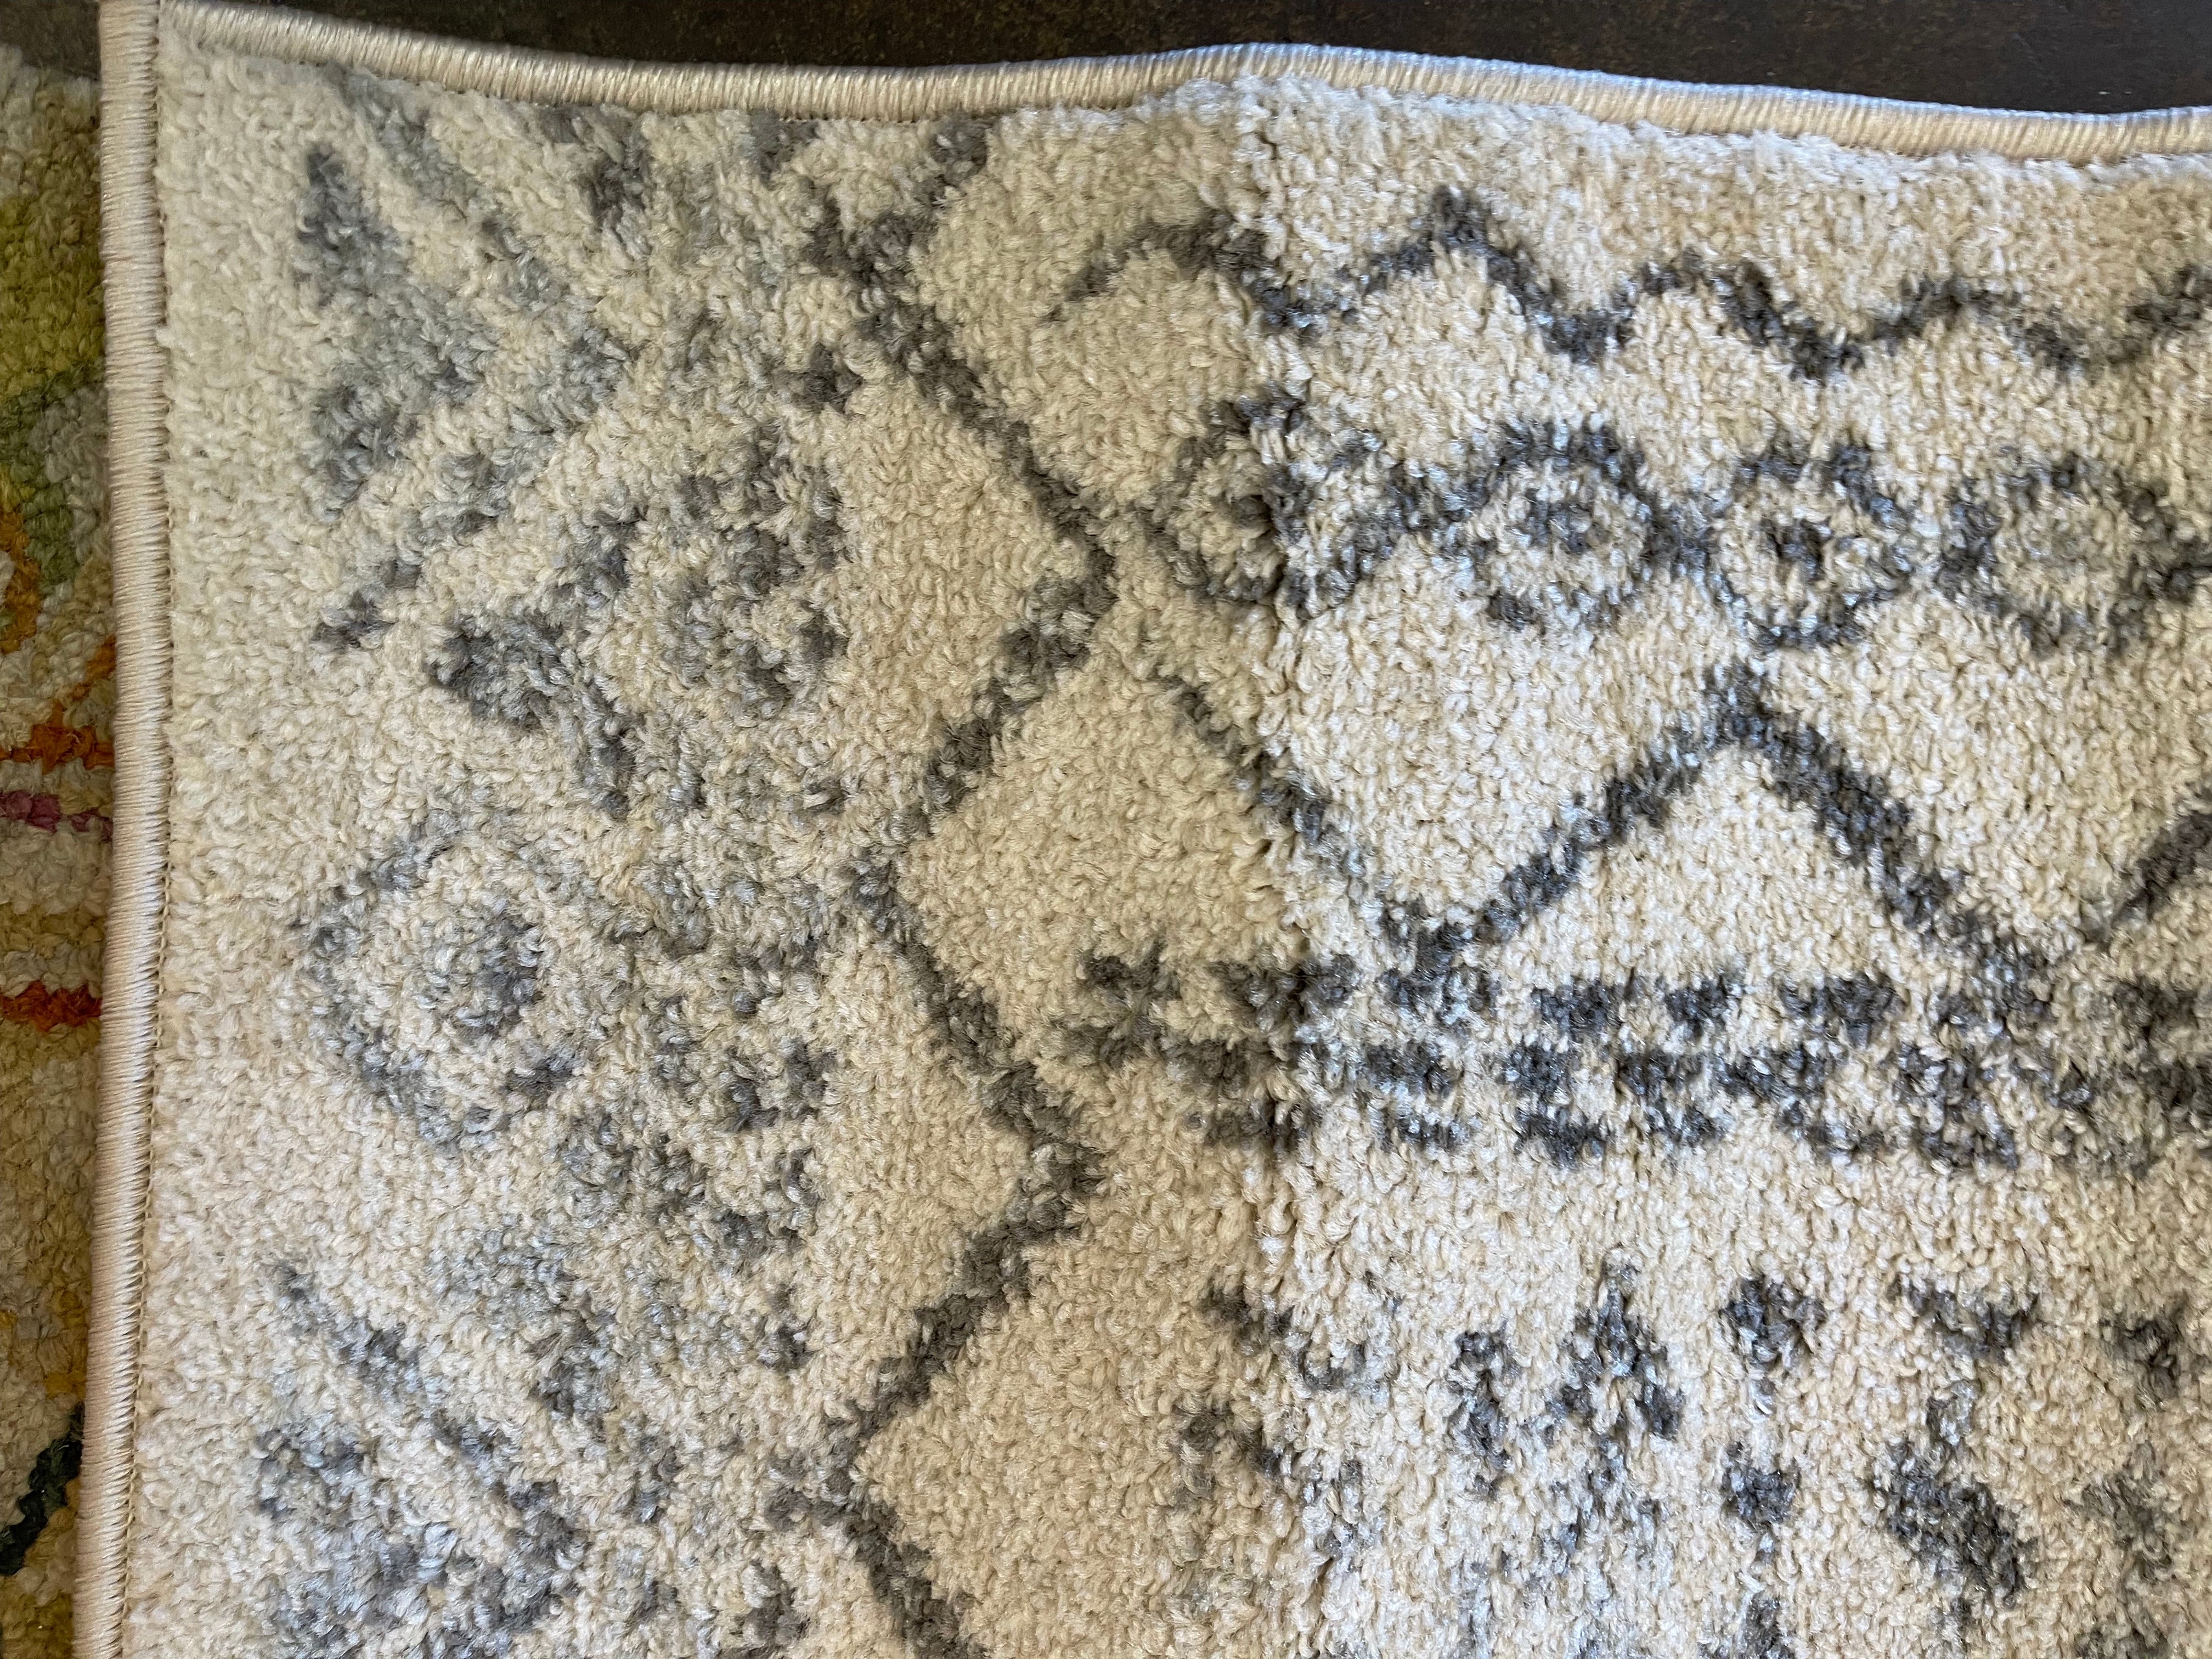 Tulum Ivory /Grey Soft Shag Boho Printed Area Rug